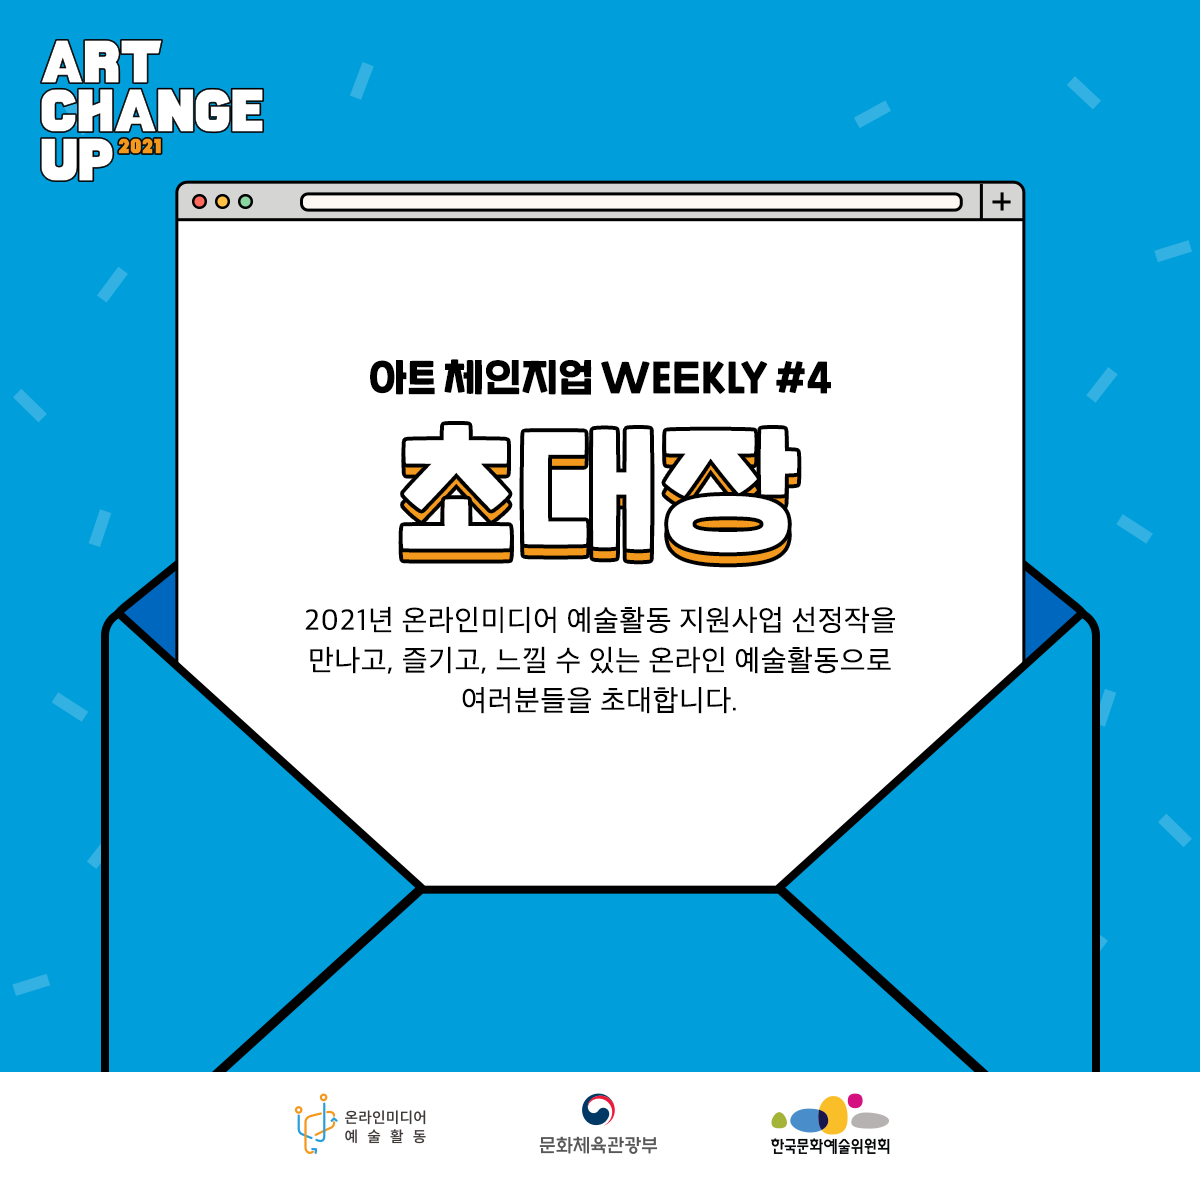 ART CHANGE UP 2021 아트 체인지업 WEEKLY #4 초대장 2021년 온라인미디어 예술활동 지원사업 선정작을 만나고, 즐기고, 느낄 수 있는 온라인 예술활동으로 여러분들을 초대합니다. 온라인미디어 예술활동 문화체육관광부 한국문화예술위원회